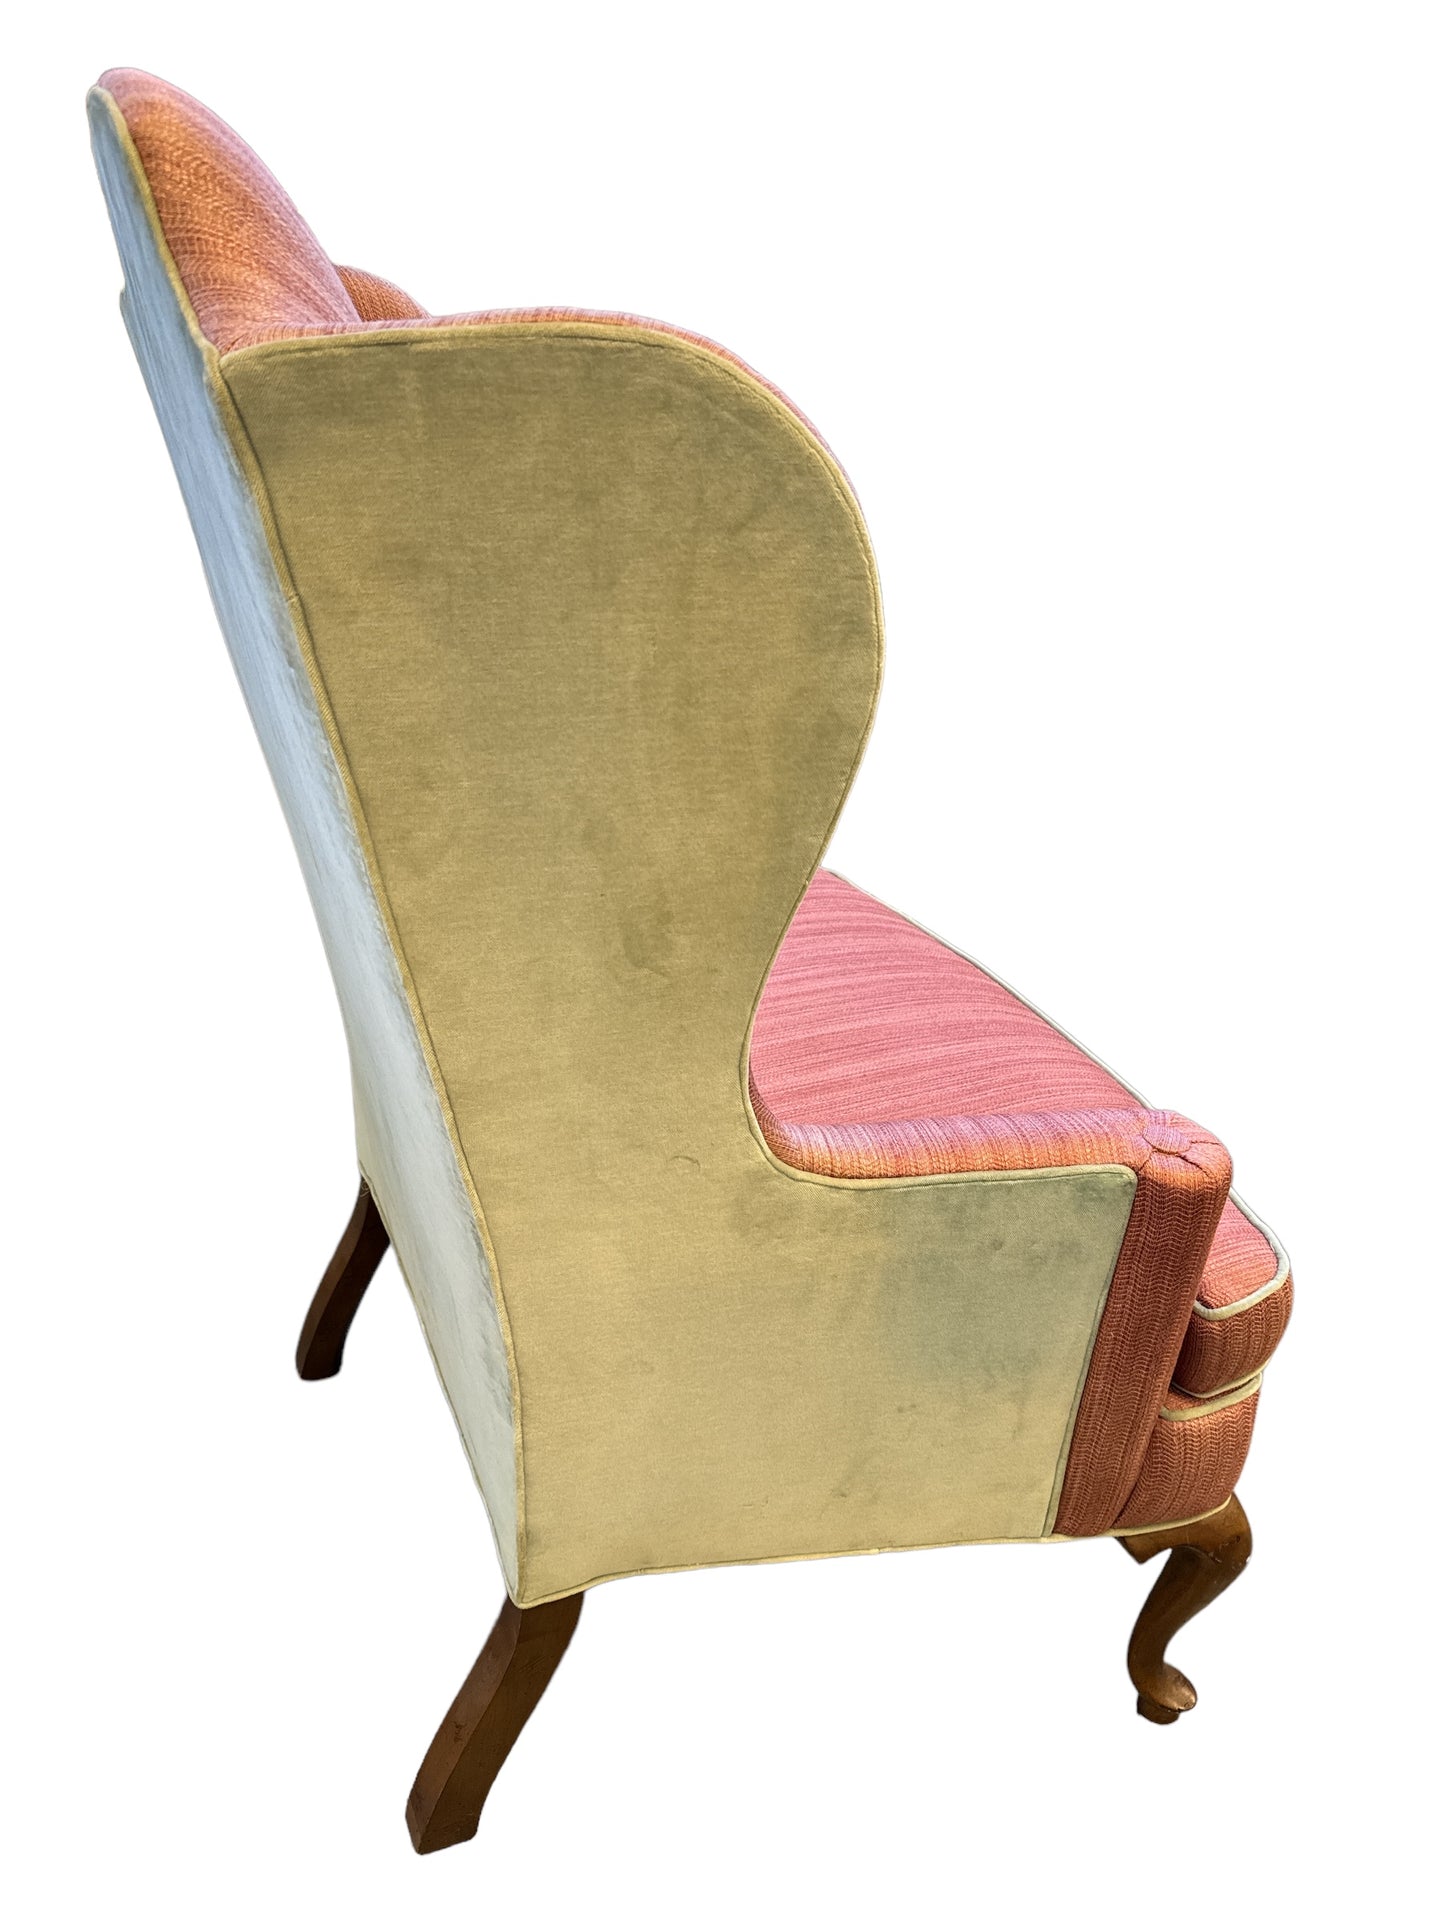 PAIR-Drexel-Heritage Wingback Chairs (Mauve, Velvet Back), 46x29x33"